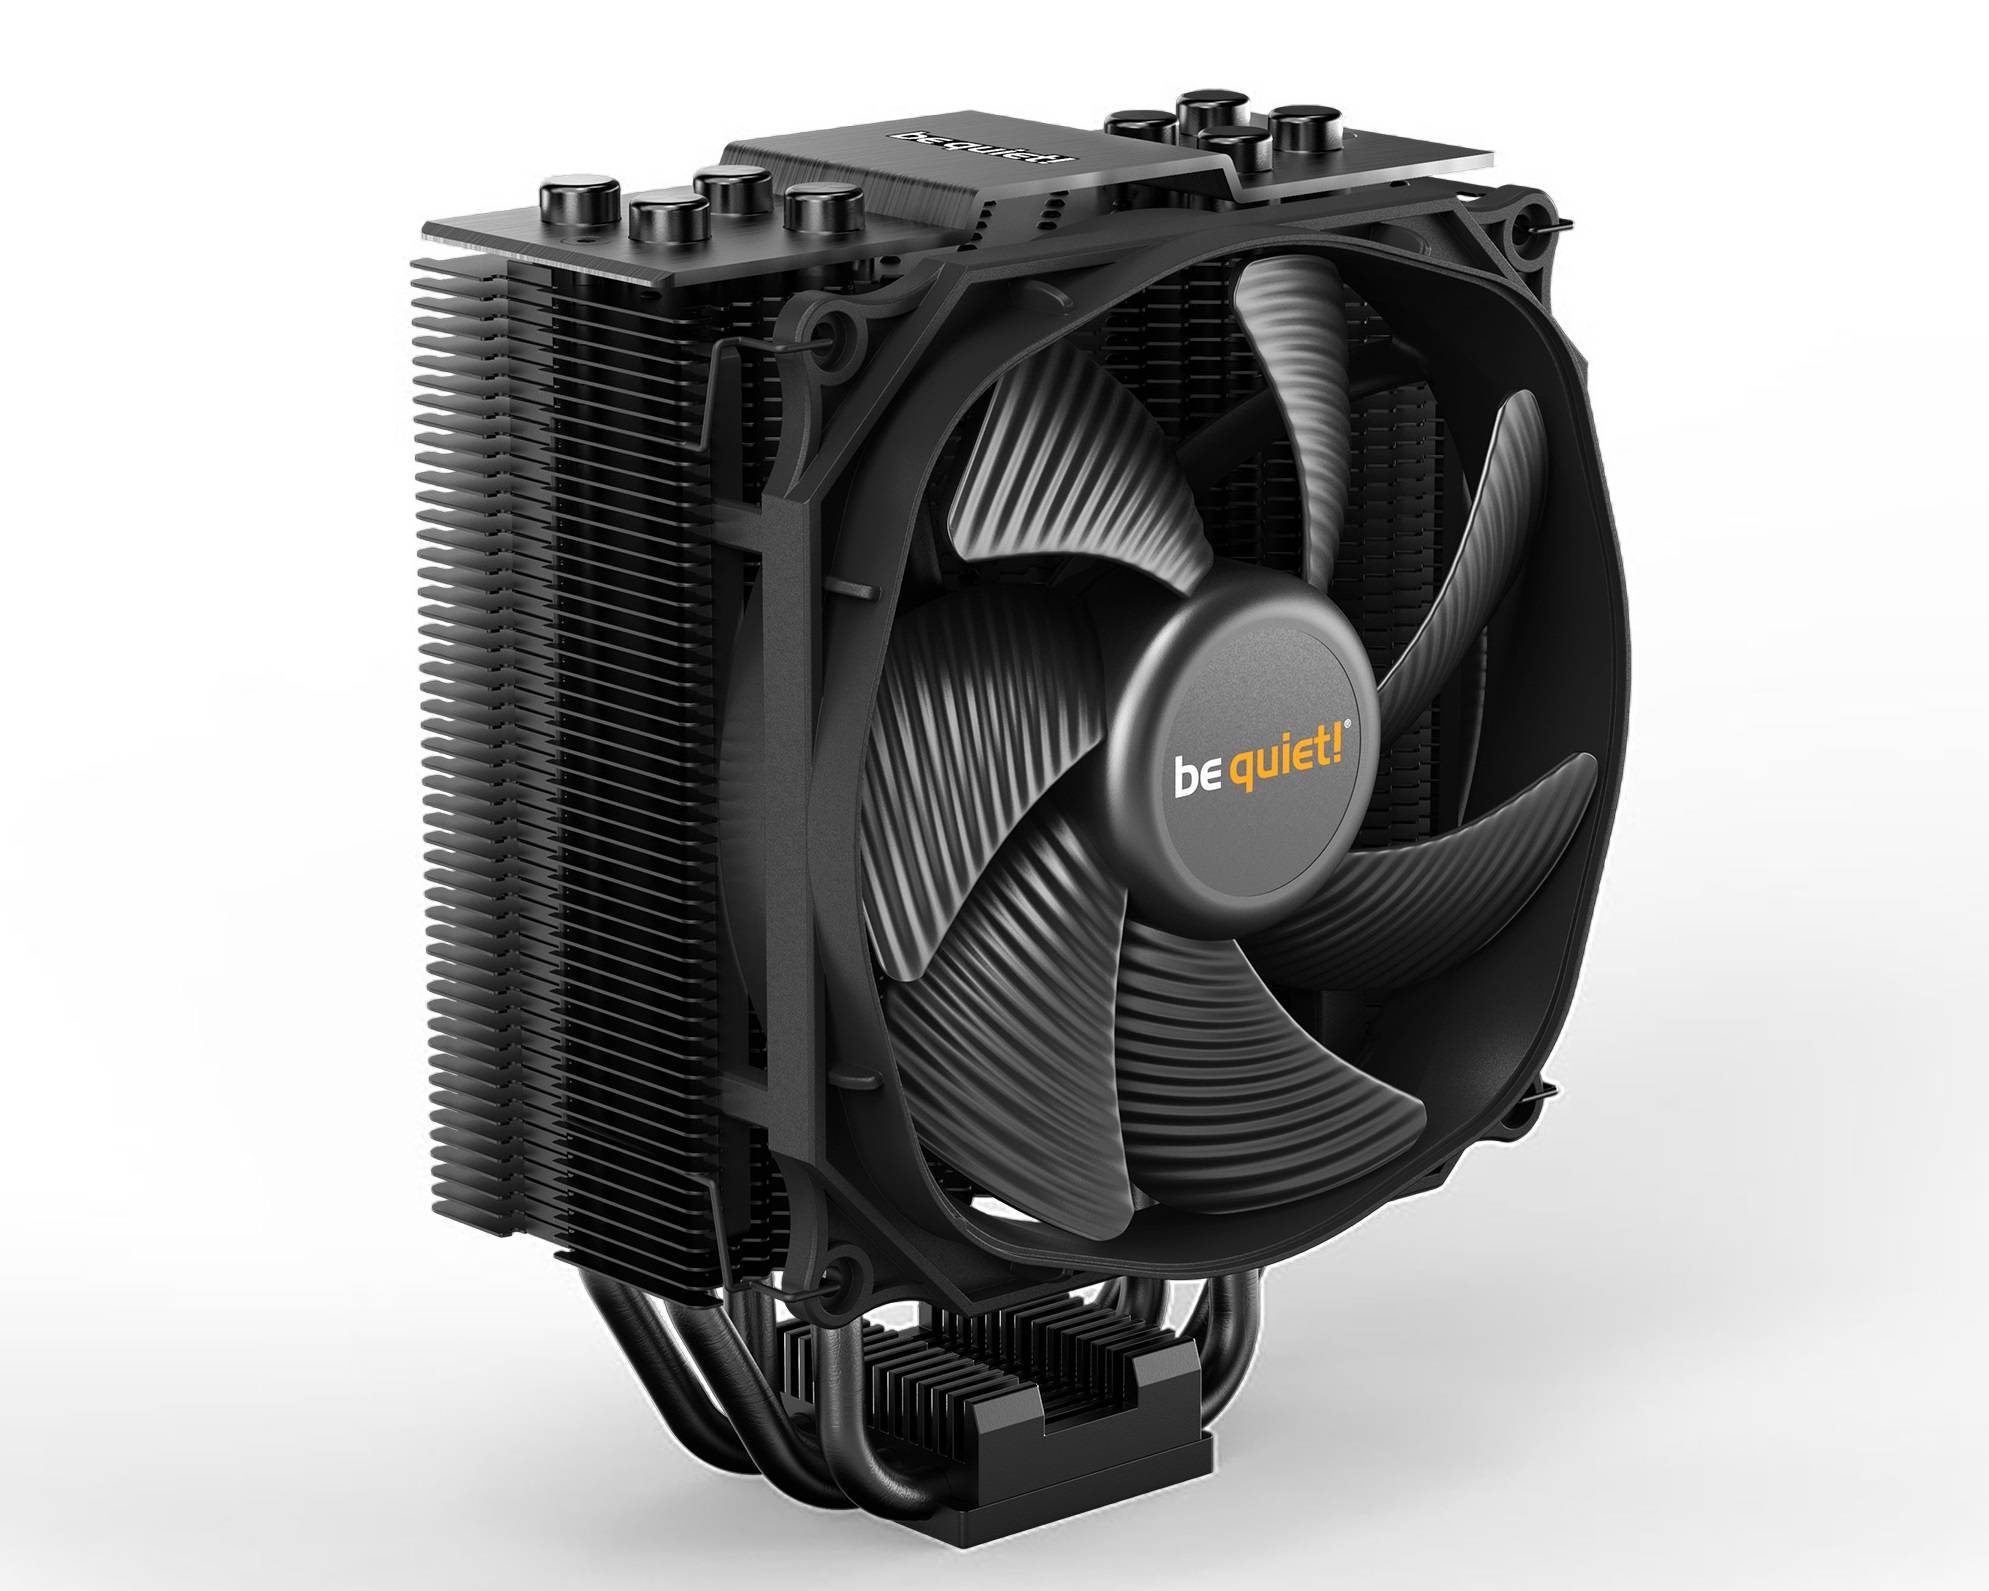 be quiet! Announces New Dark Rock Slim CPU Cooler | UnbxTech